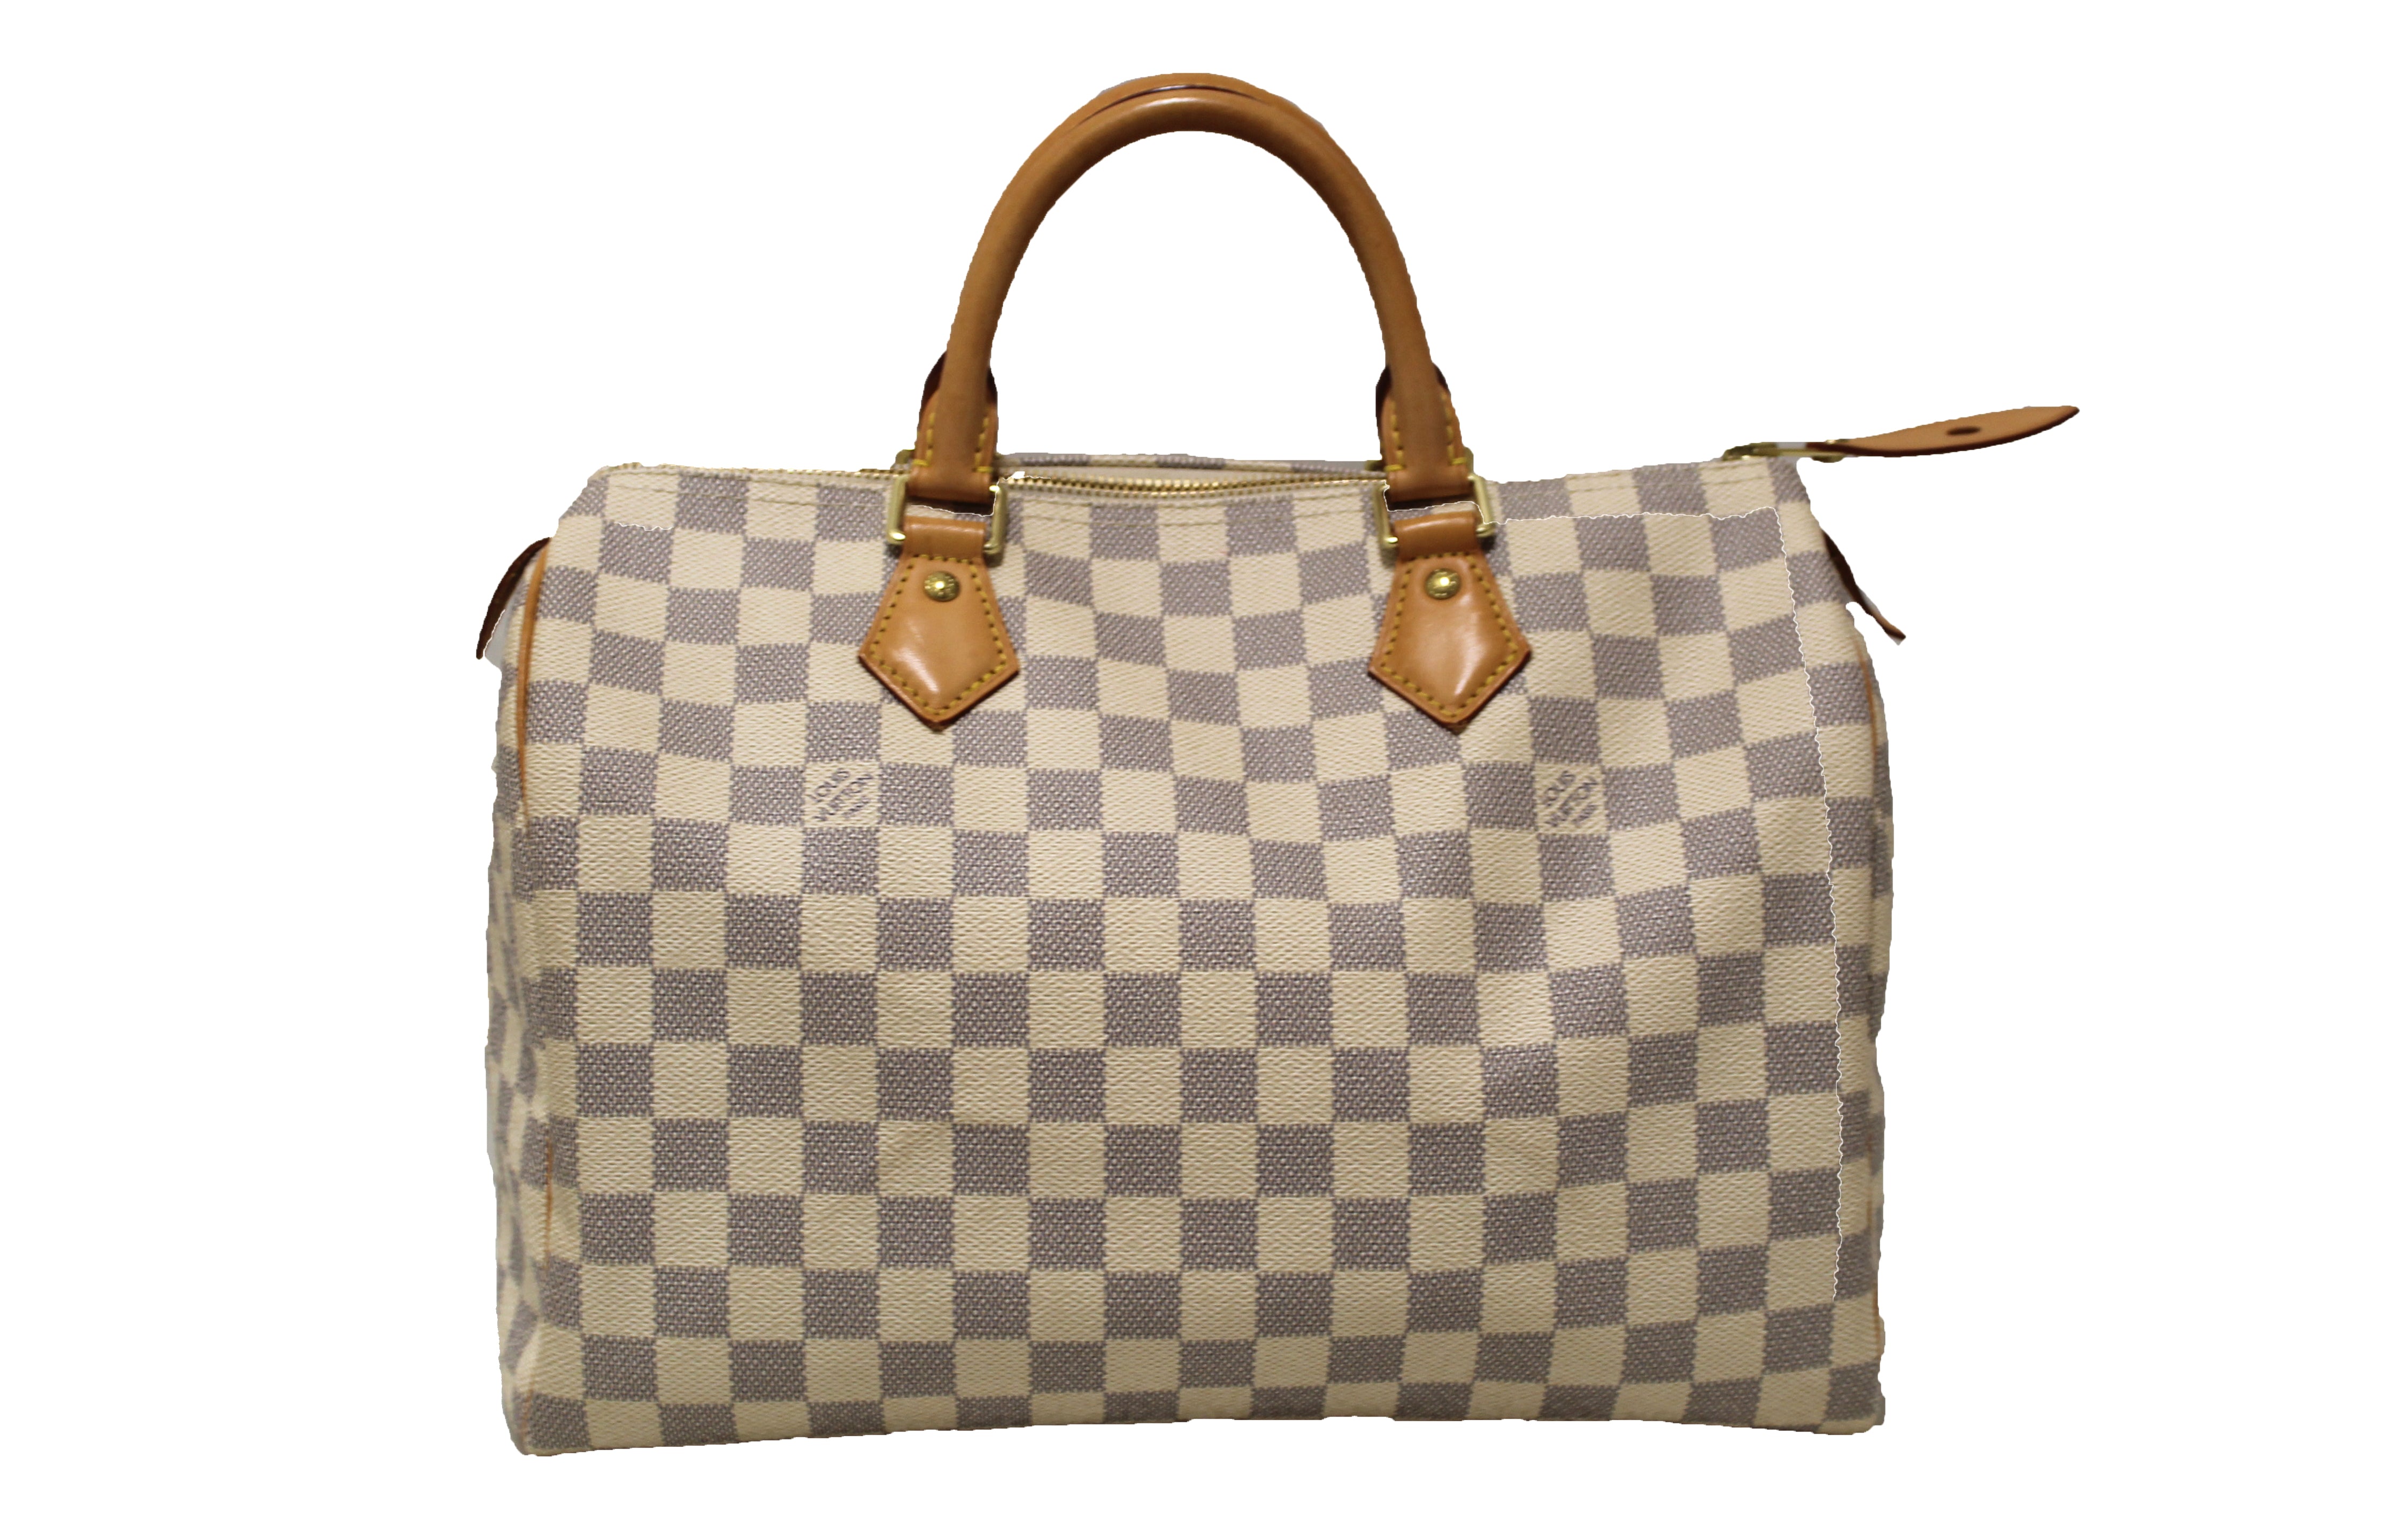 Authentic Louis Vuitton Damier Azur Canvas Speedy 30 Handbag